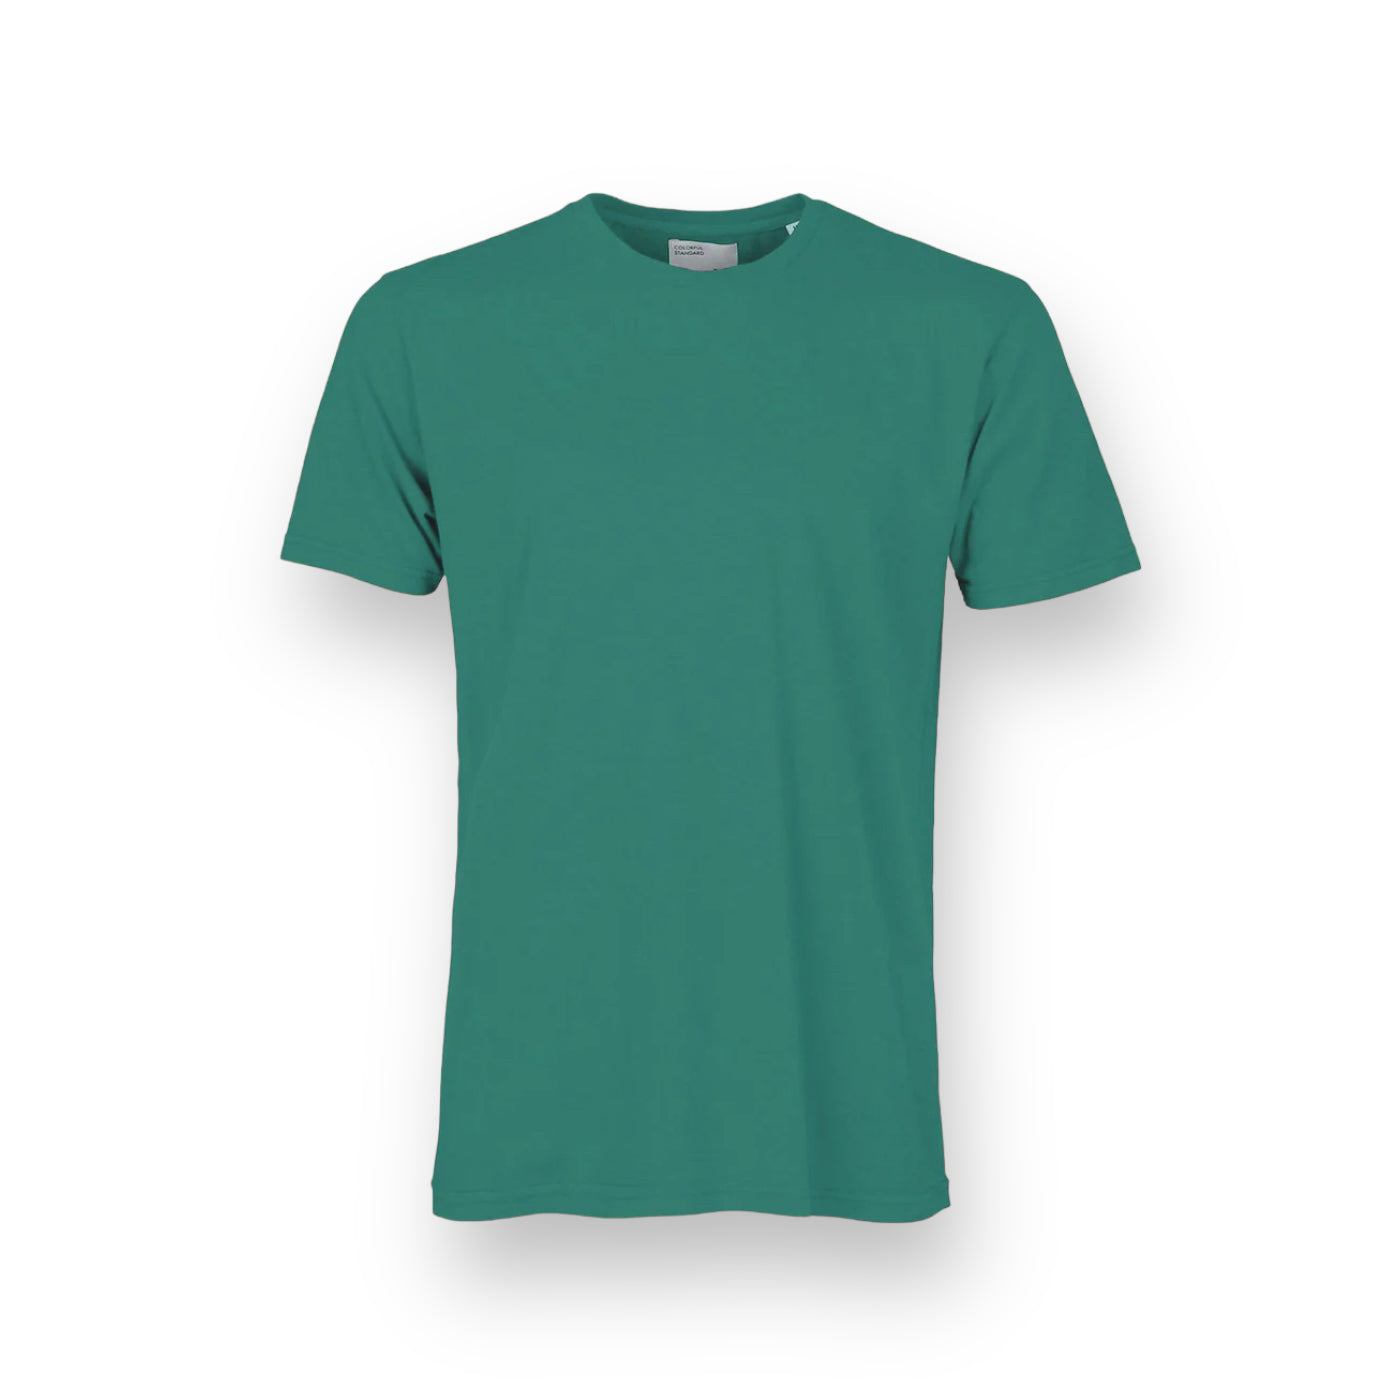 Buntes Standard-klassisches T-Shirt-Ozean-Grün